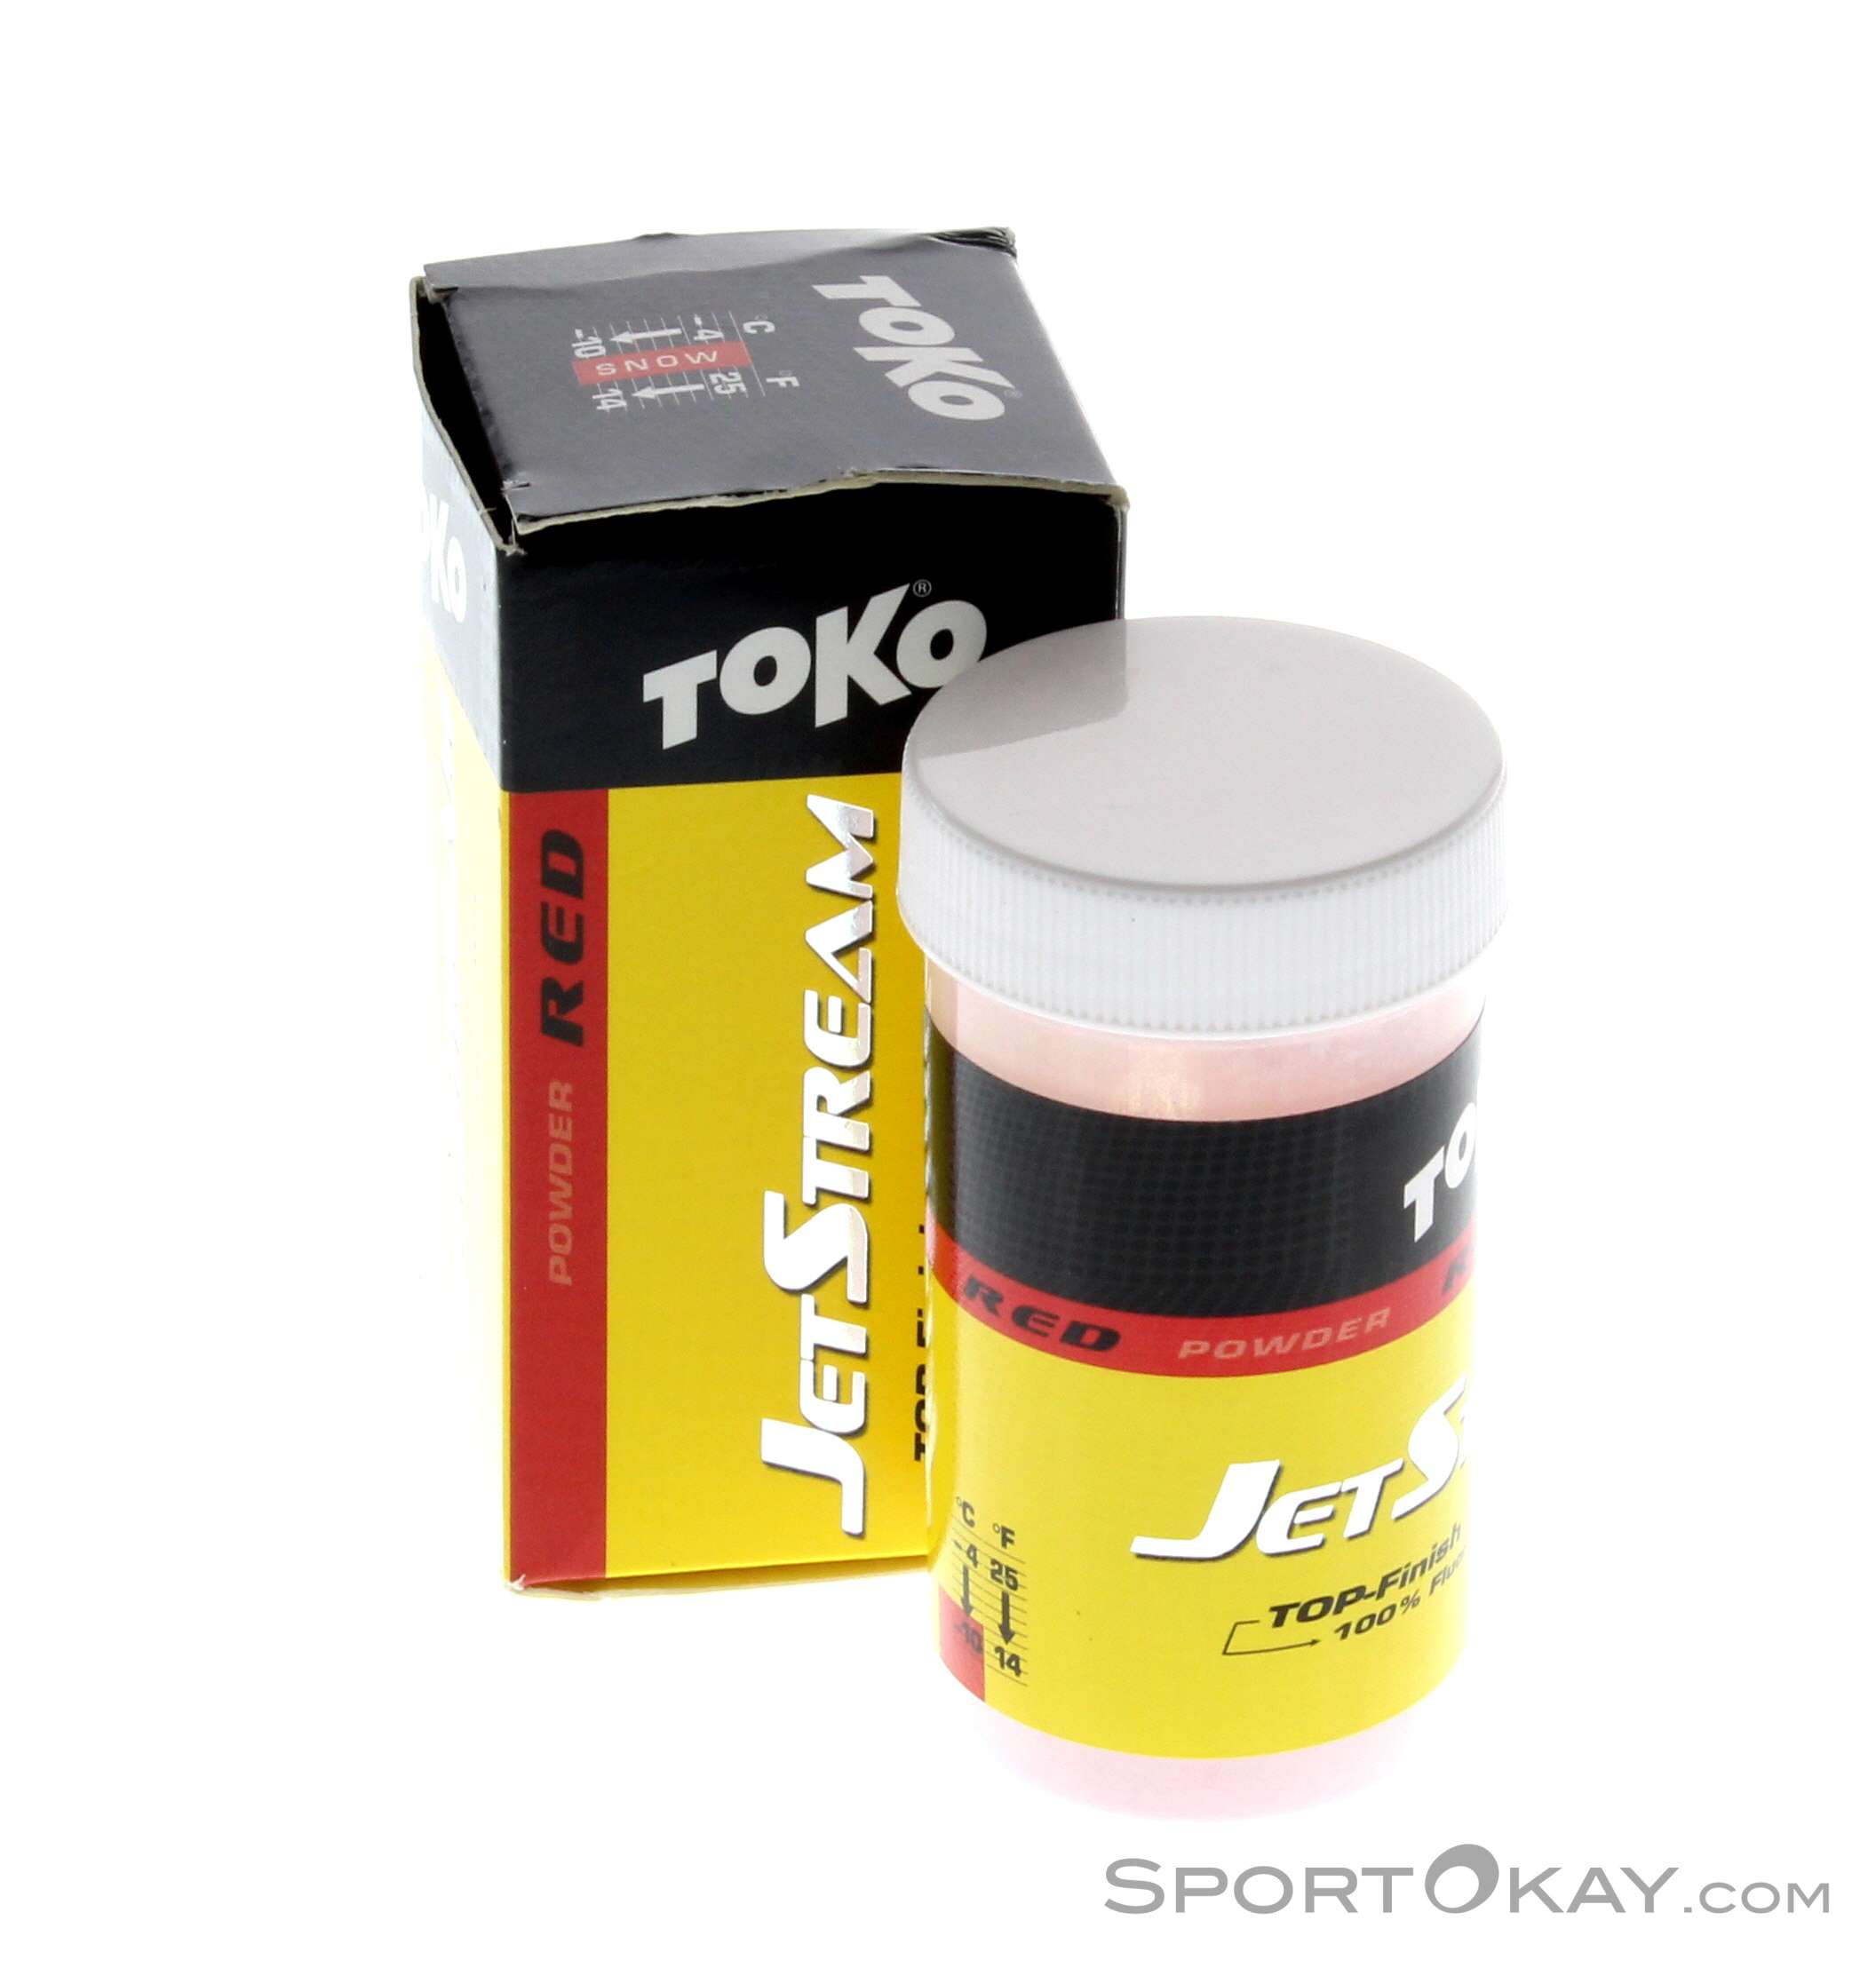 TOKO】jetstream powder 2.0 レッド - その他